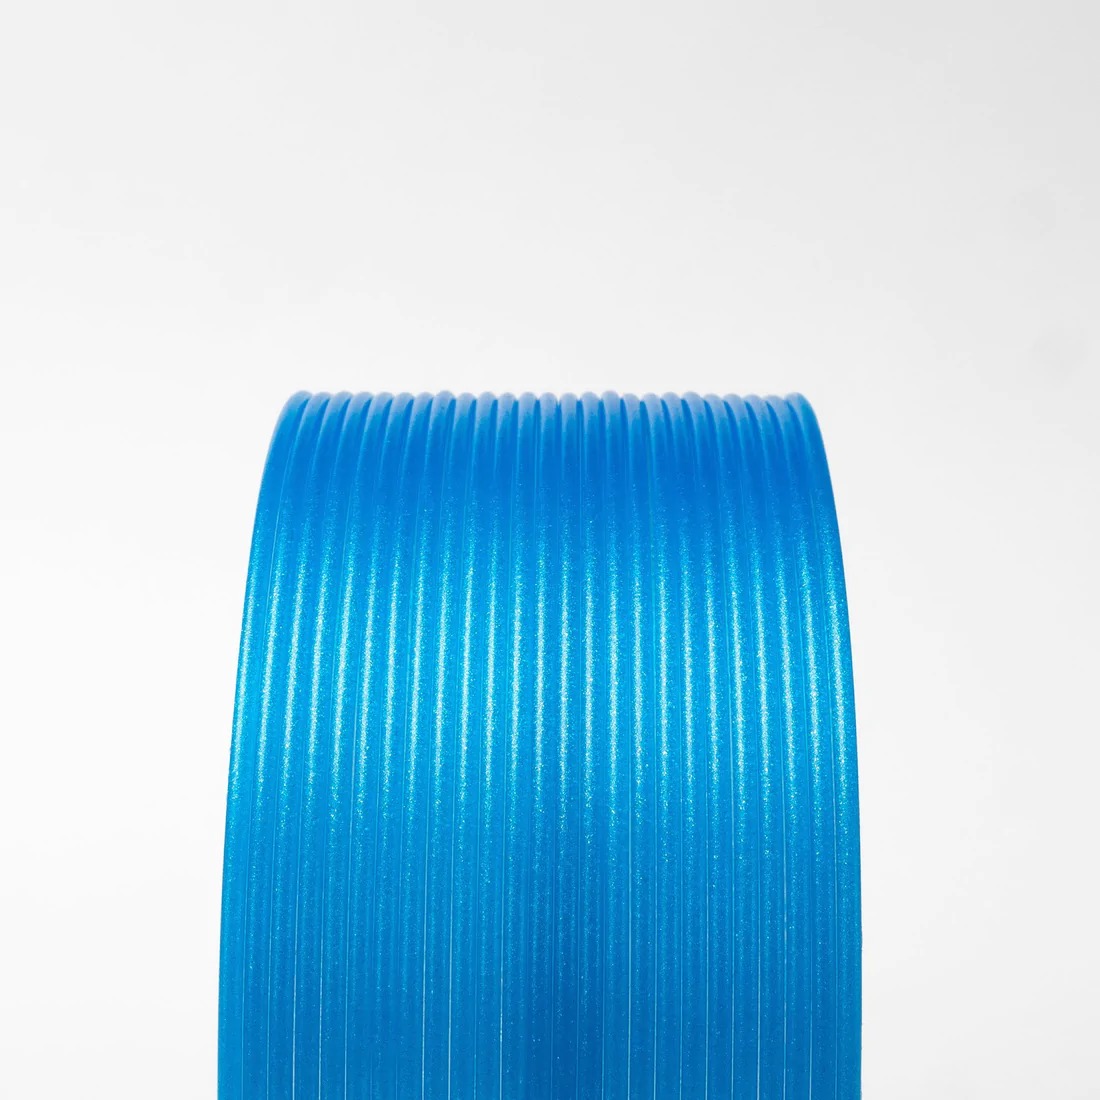 Glitter Flake HTPLA v2 - Winter Blue 2.85mm 3D printing filament